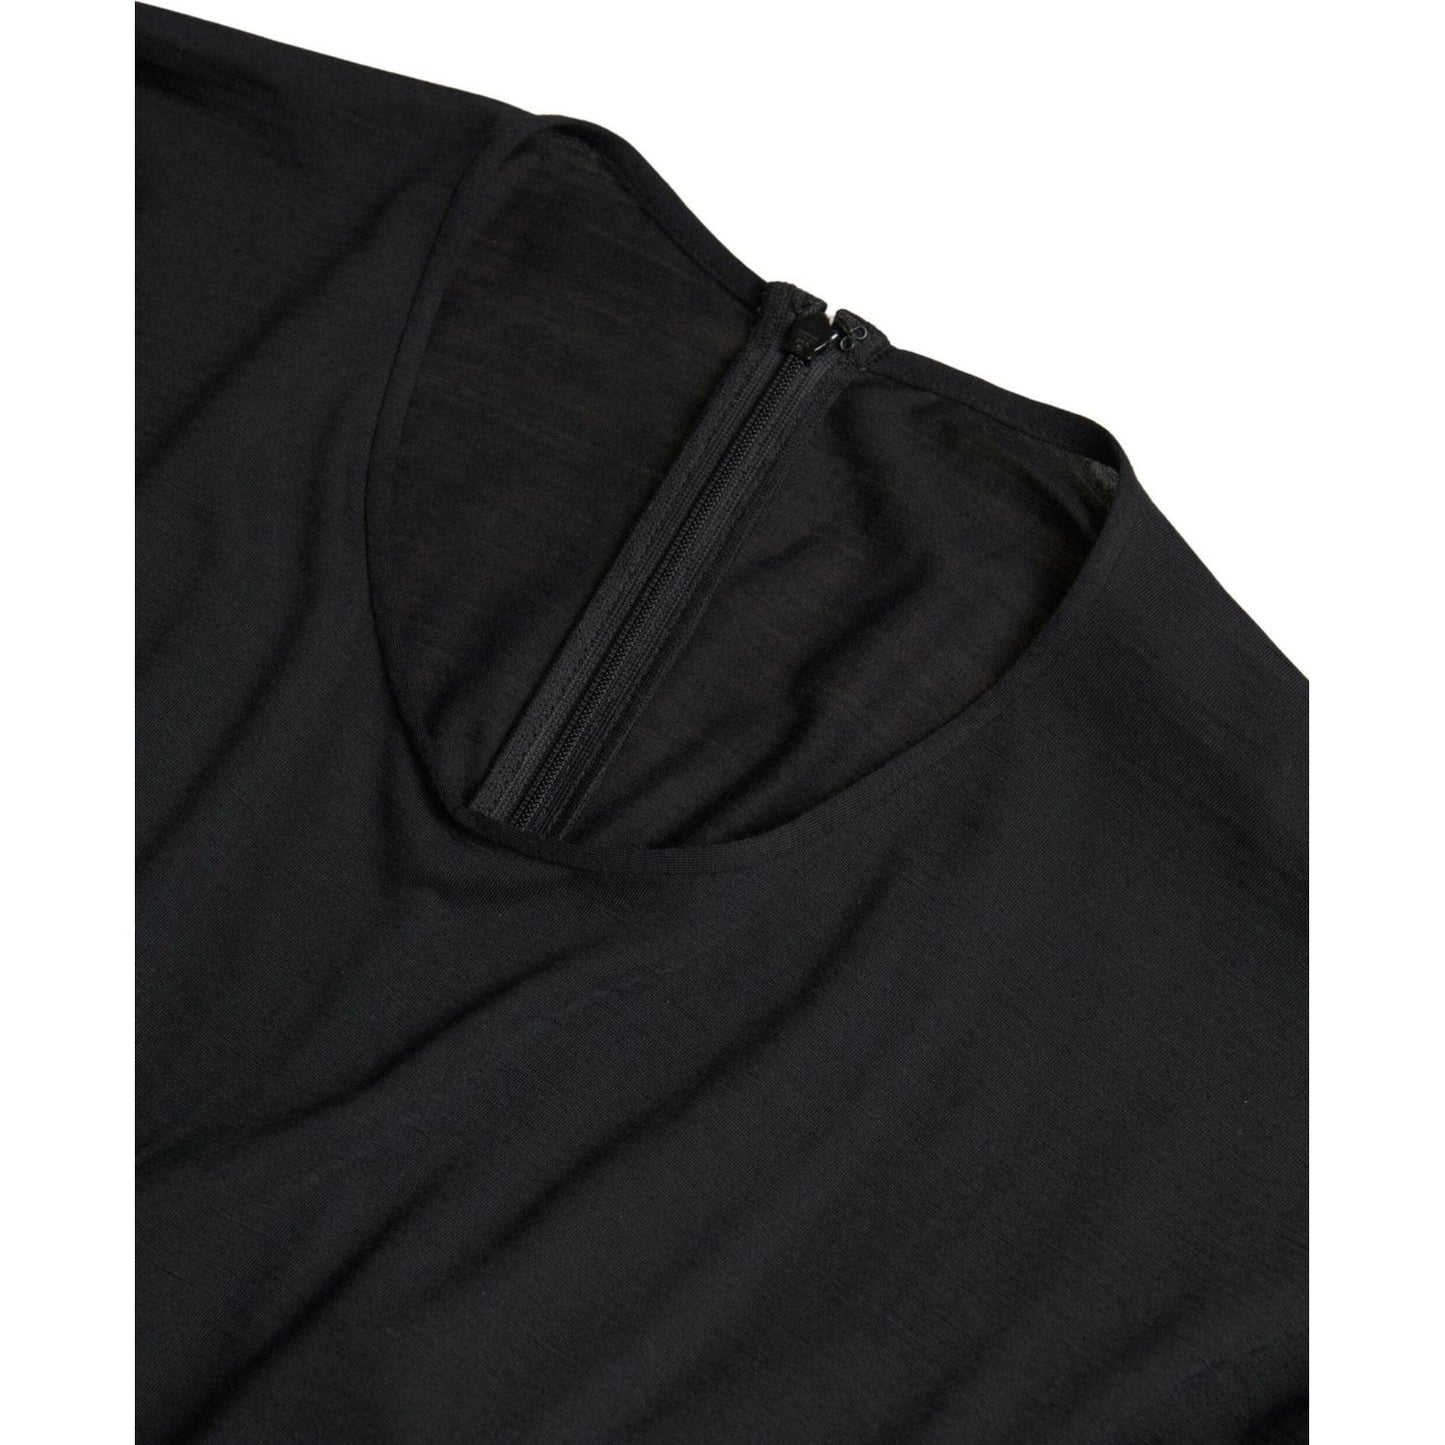 Dolce & Gabbana Elegant Black Wool Wrap Dress black-wool-wrap-sheath-midi-gown-dress